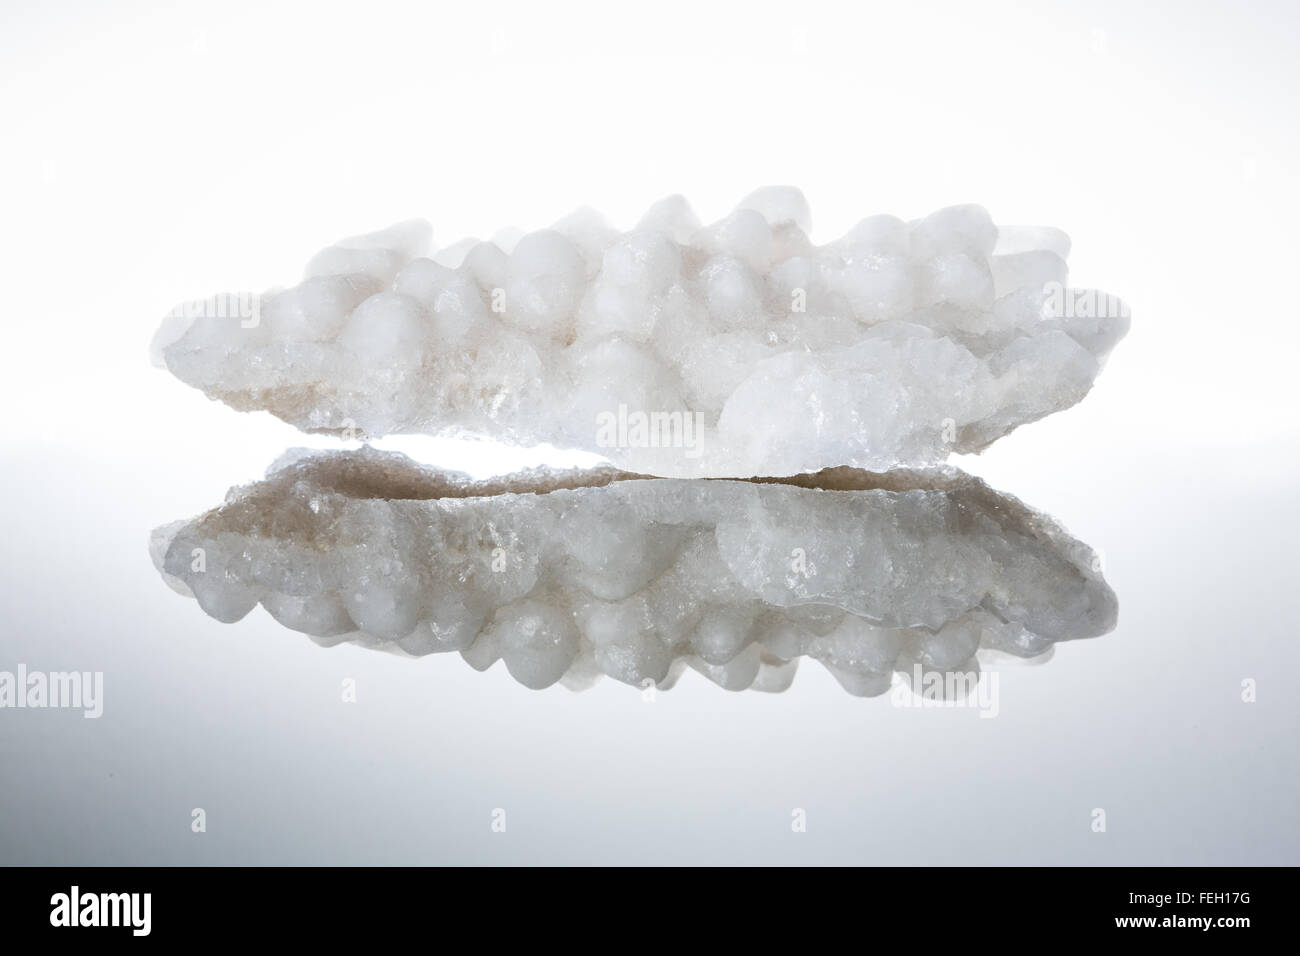 Piece of salt crystal from Jordan Dead Sea on white surface Stock Photo